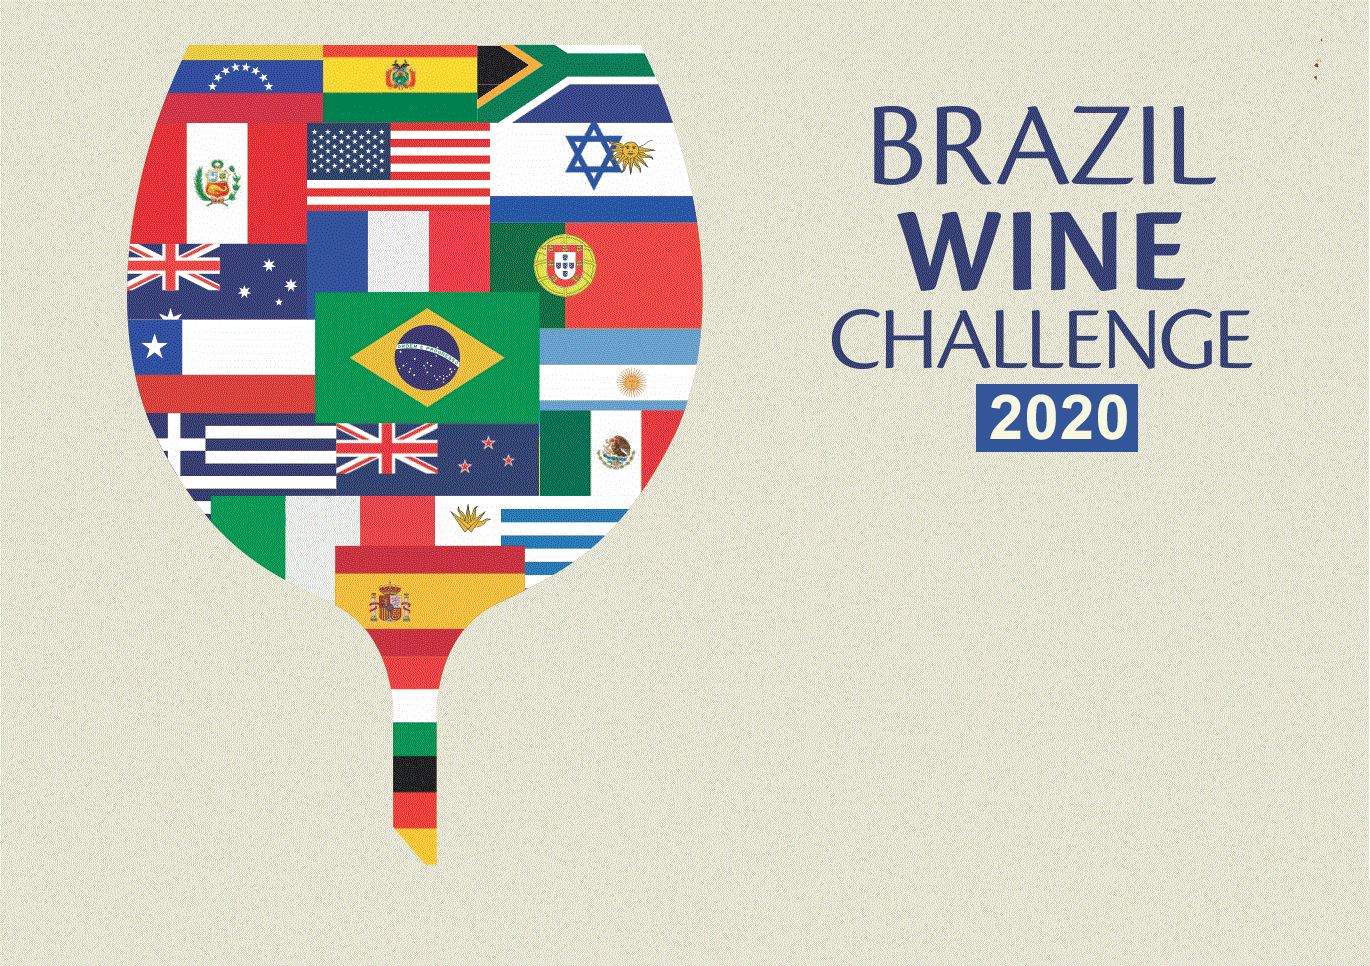 BRAZIL WINE CHALLENGE